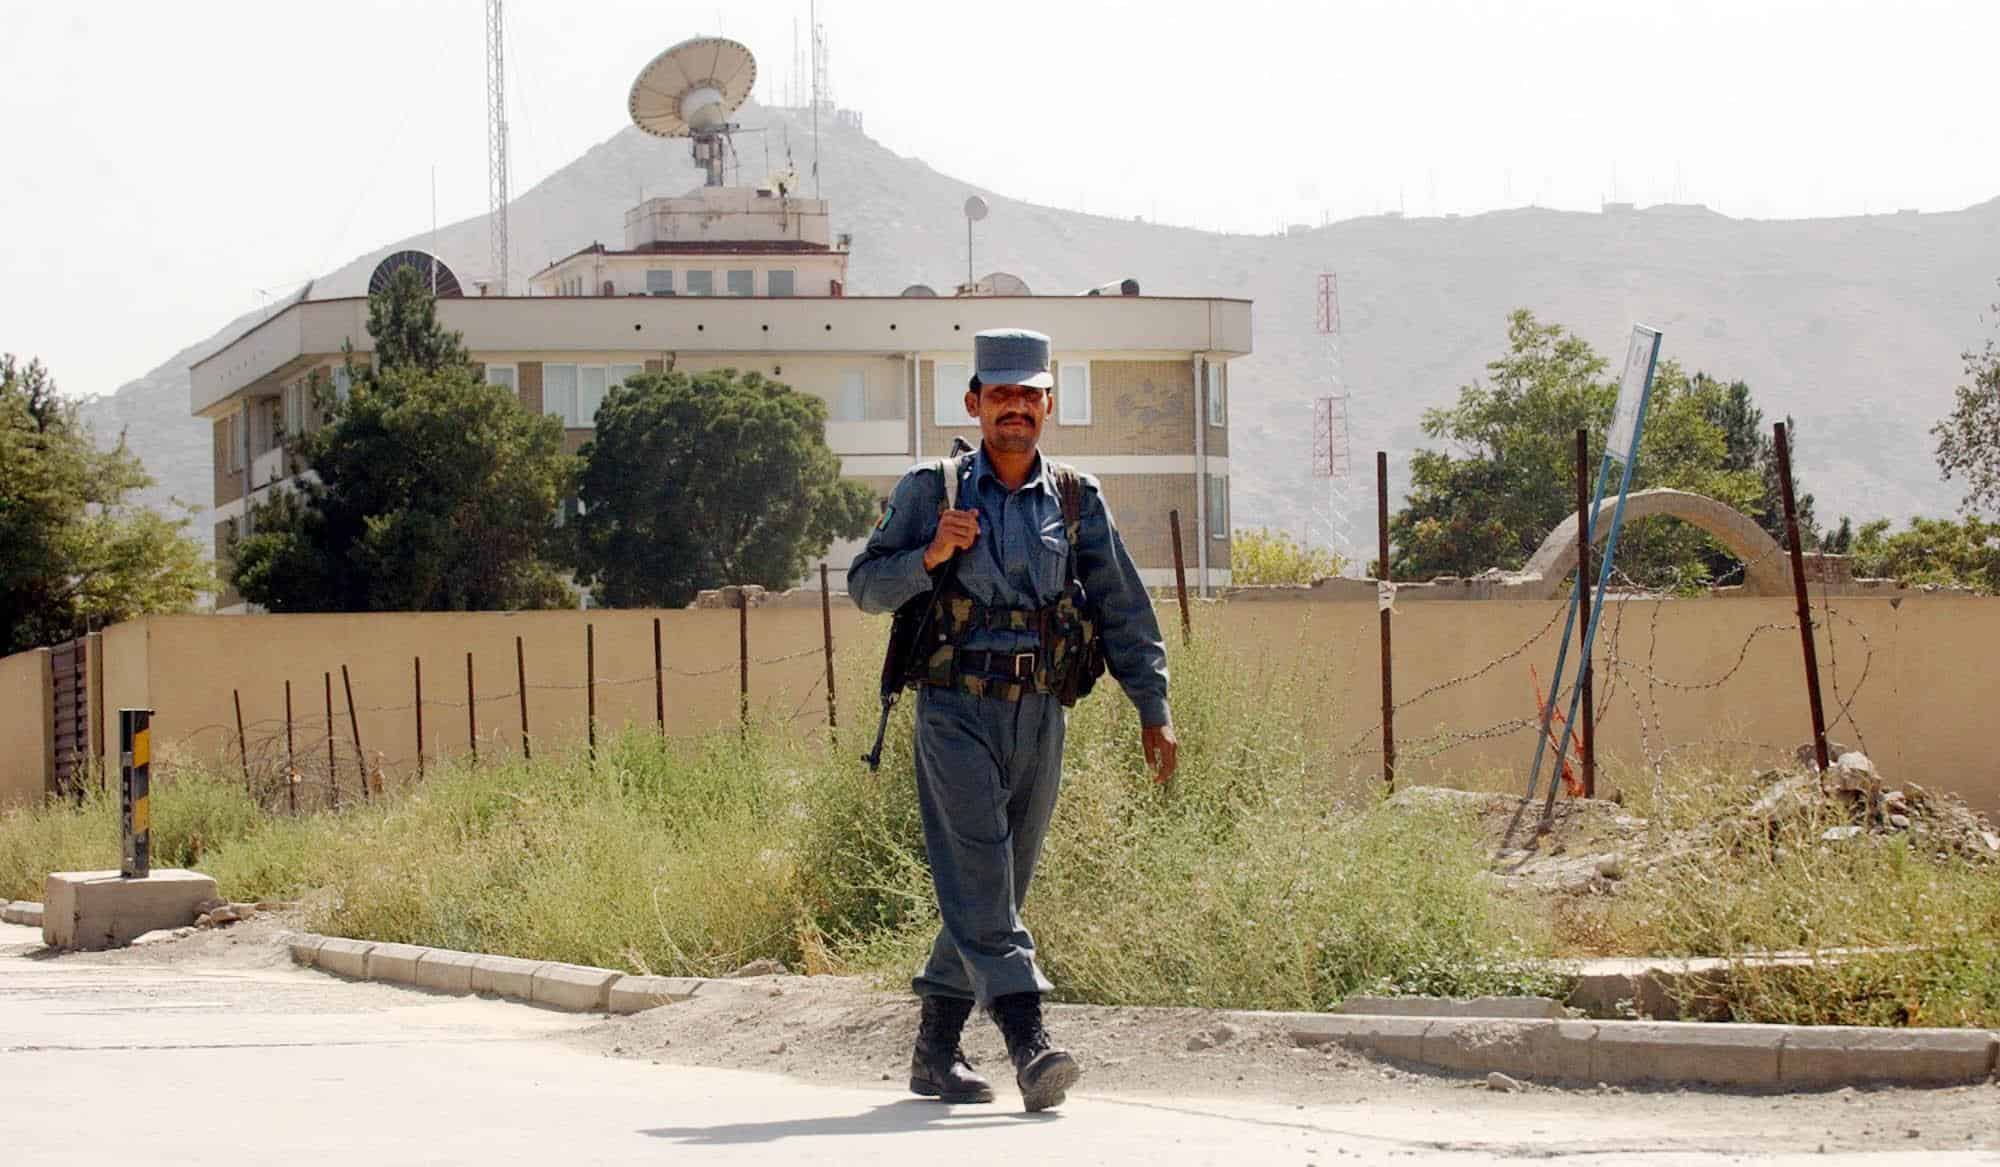 Abandoning sensitive papers in Kabul embassy ‘not good enough’